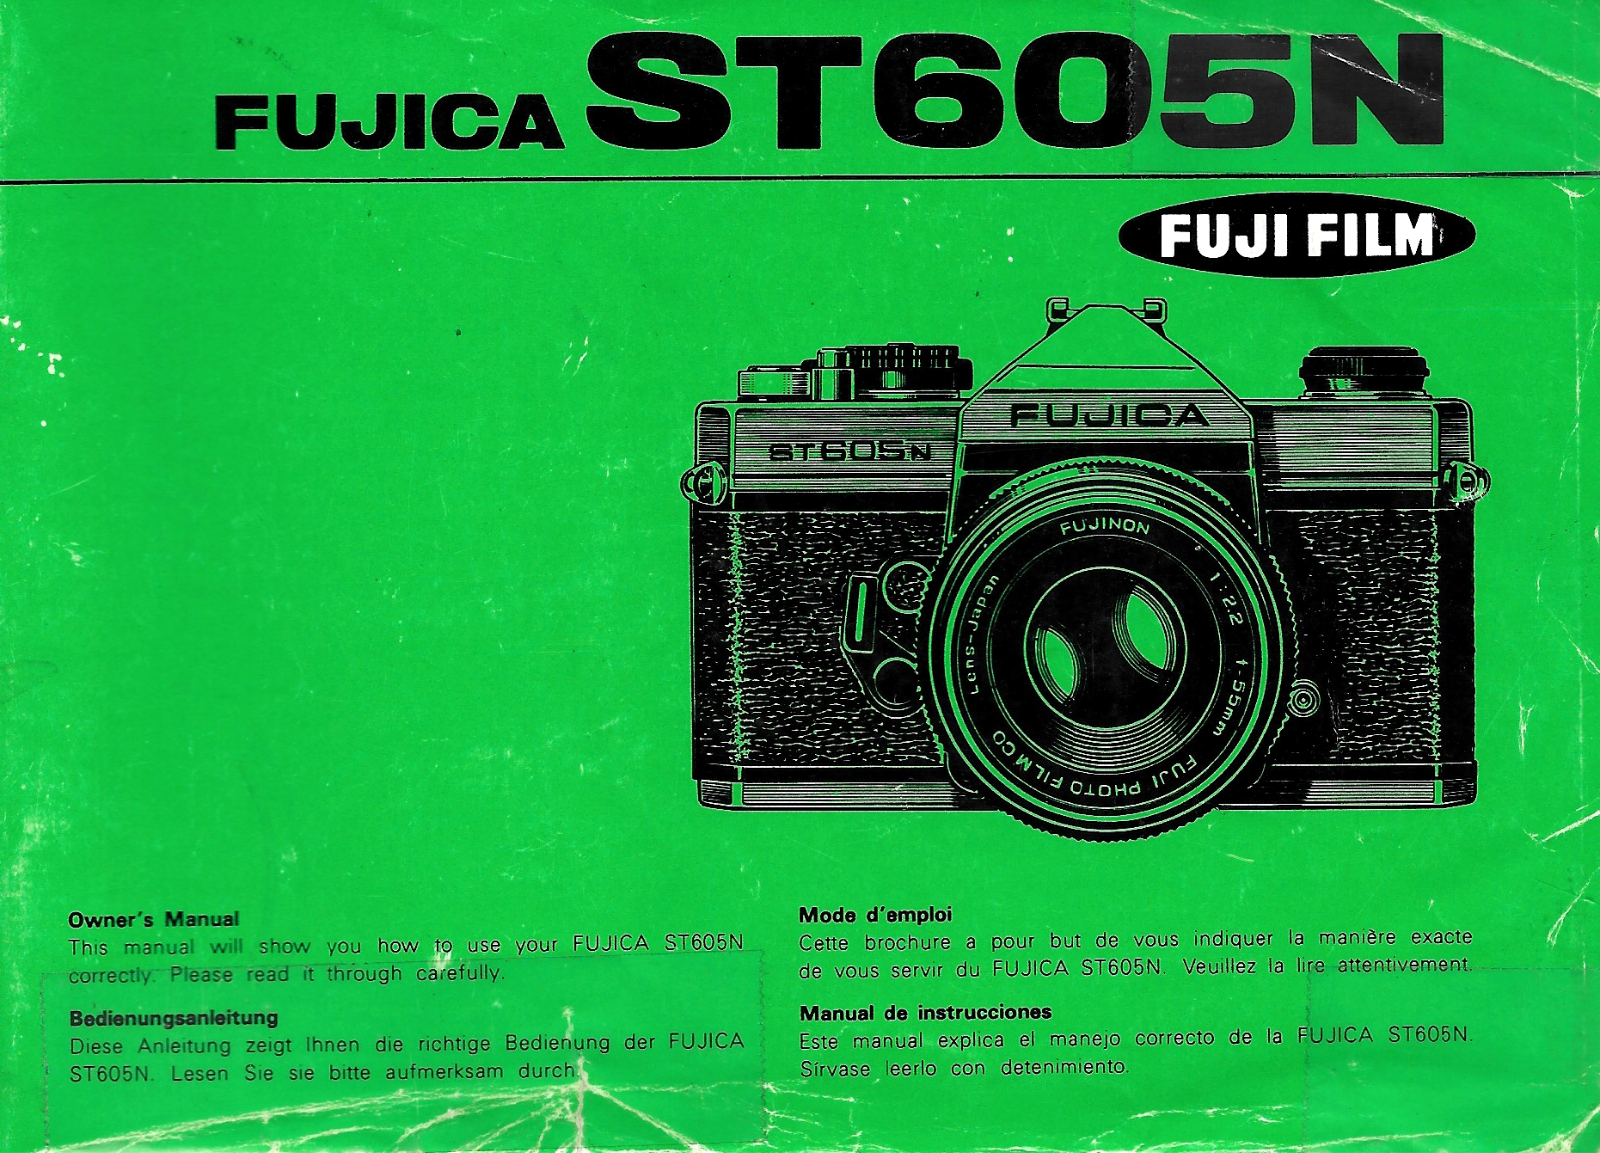 Fujica ST605N Owners Manual